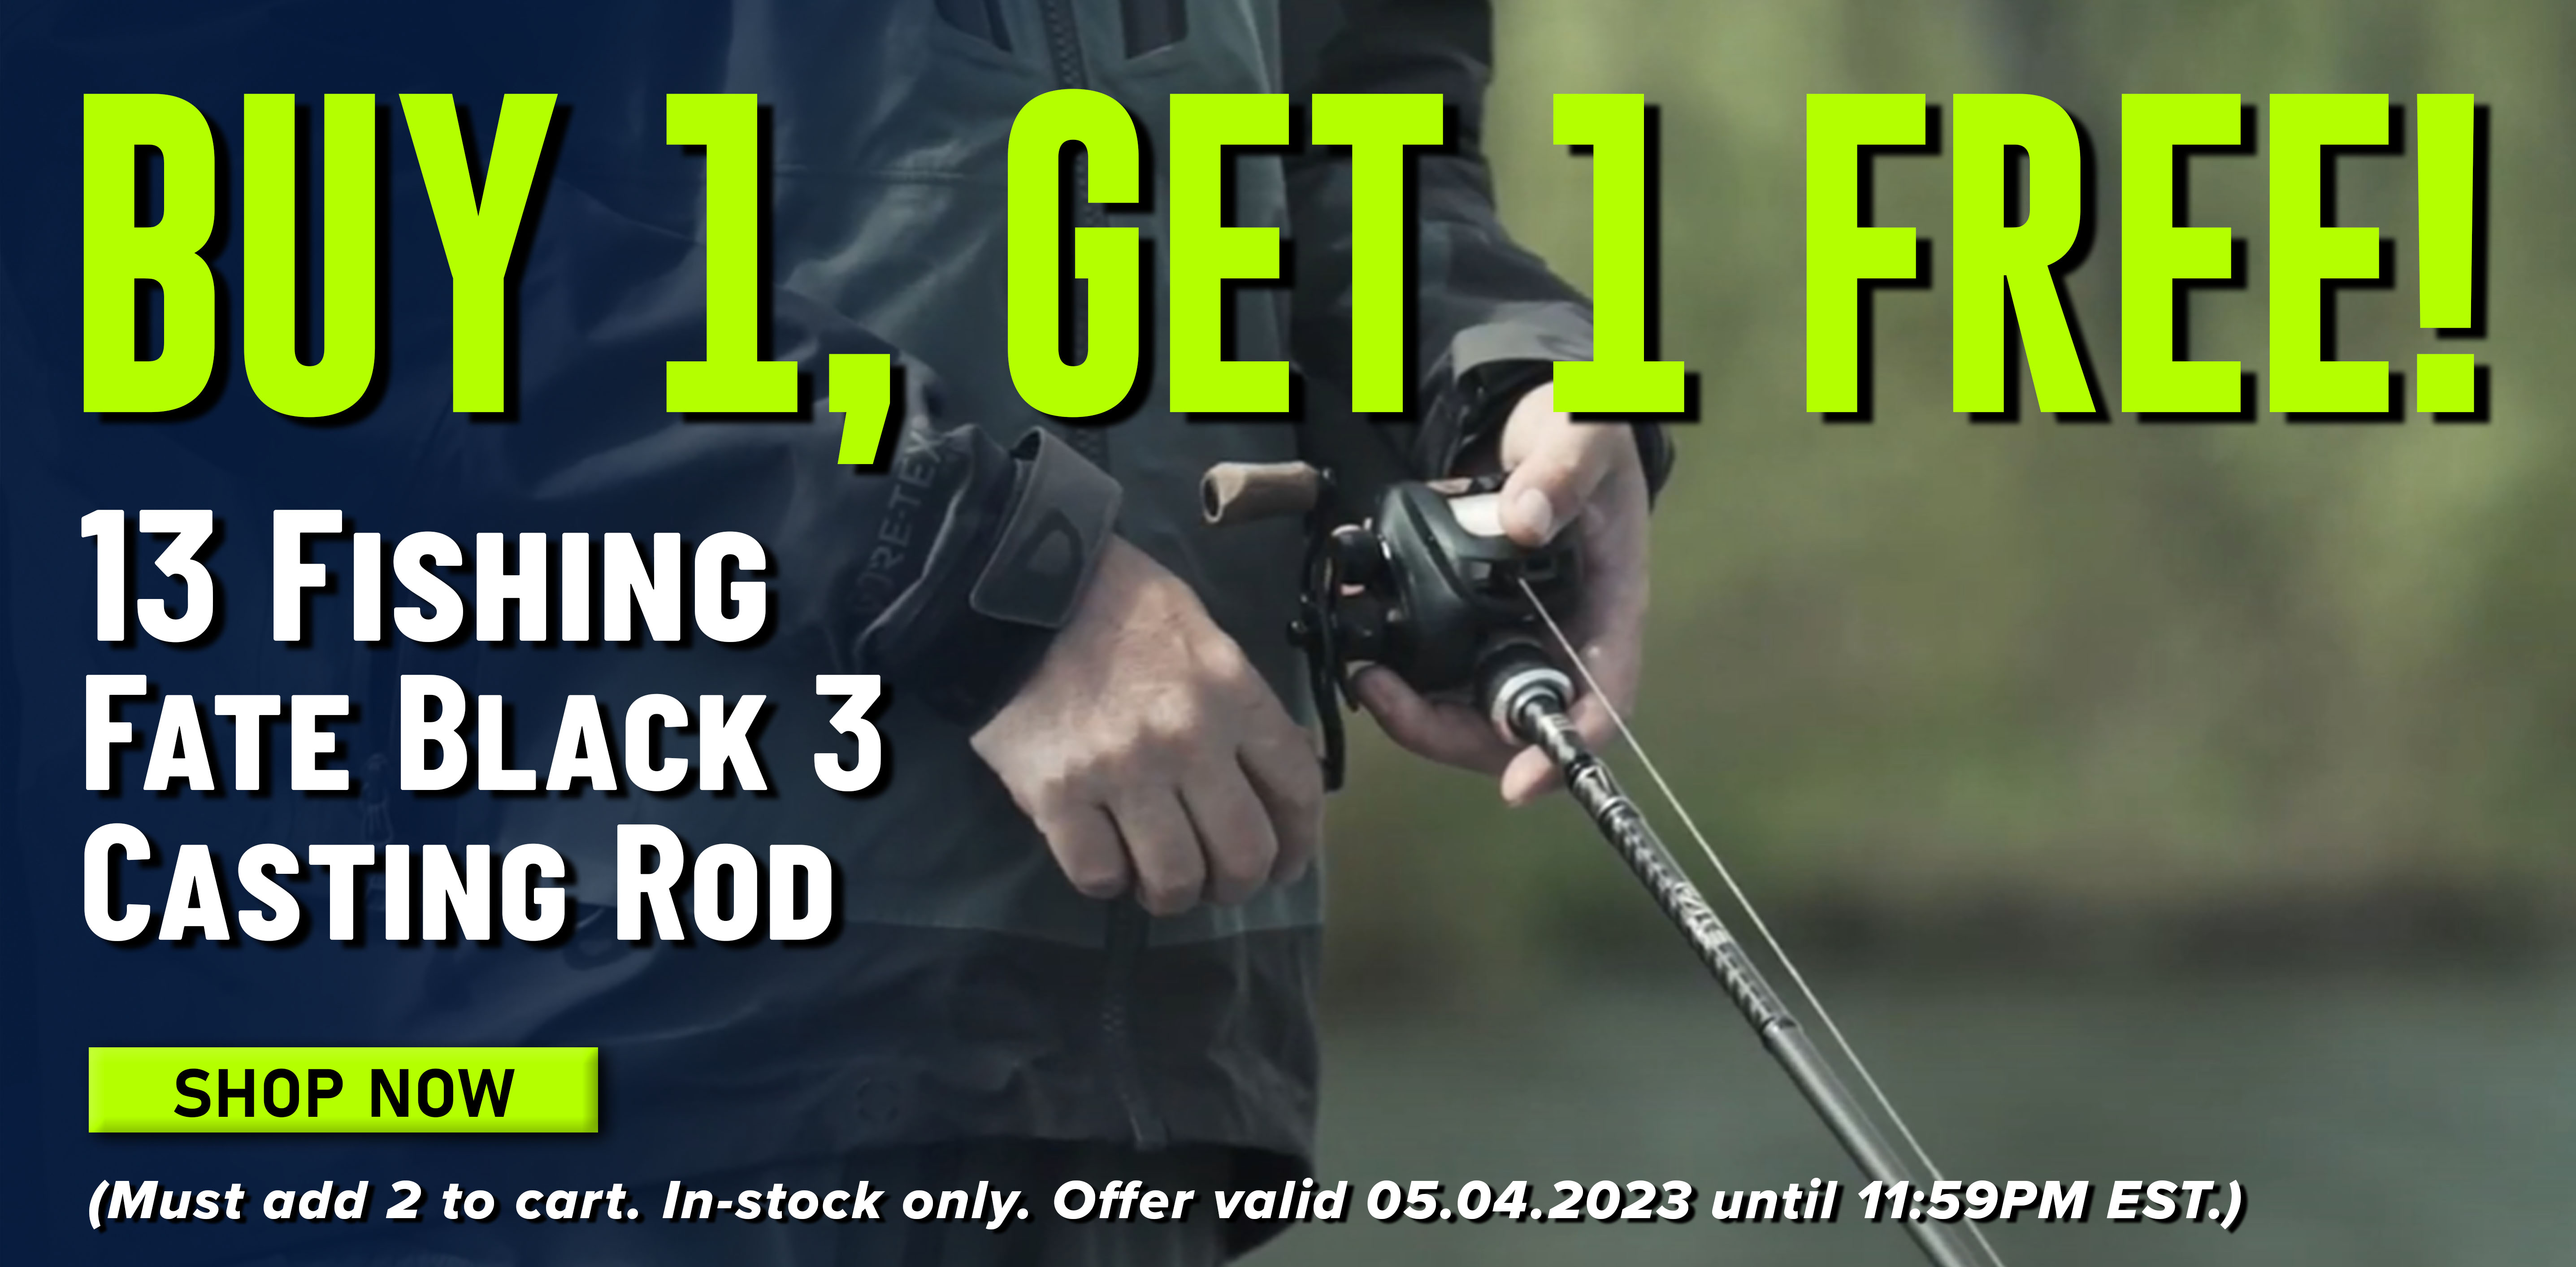 Buy 1, Get 1 Free 13 Fishing Fate Black 3 Rods! - Fish USA